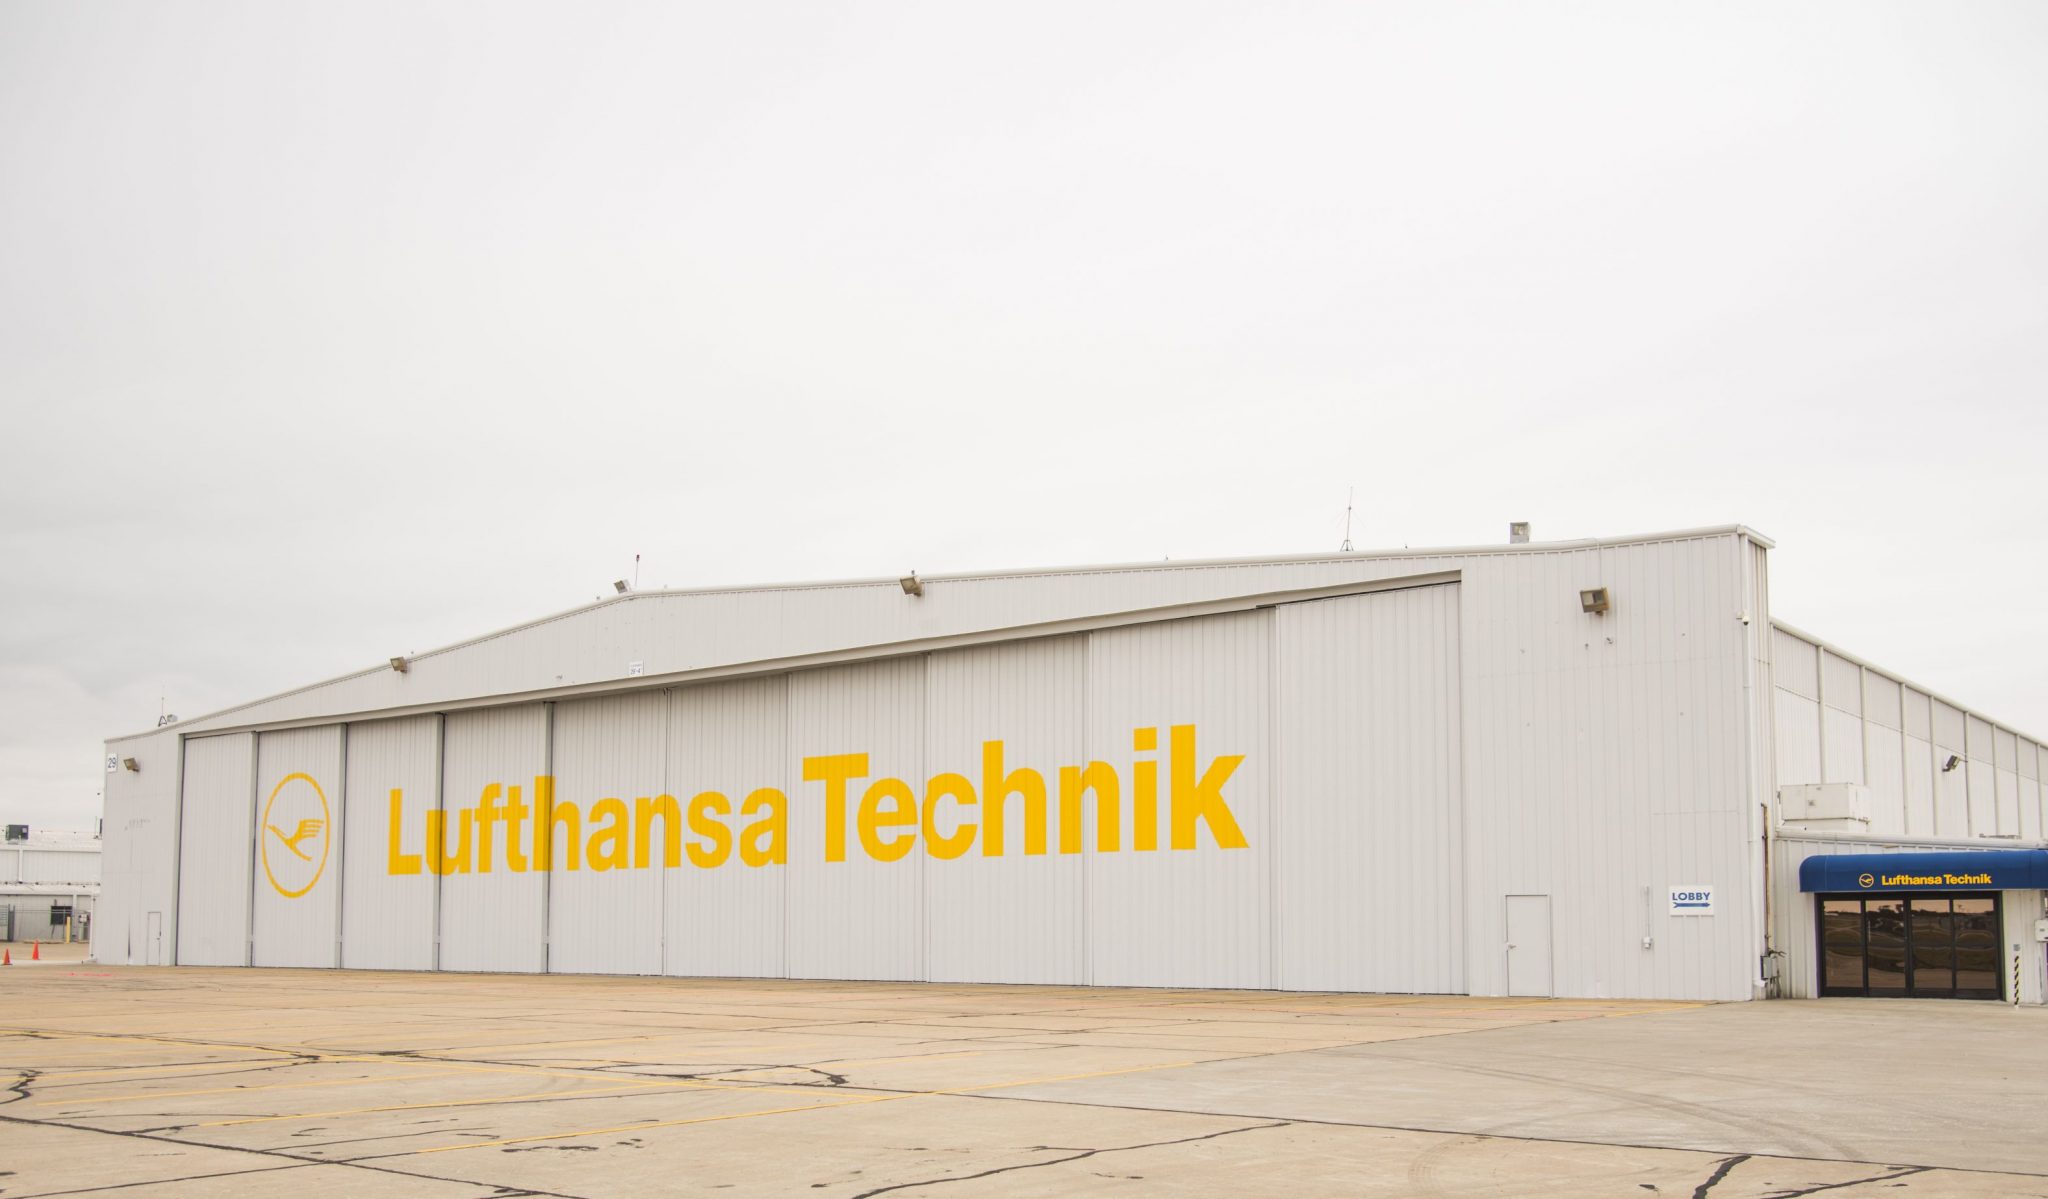 App “t/complaint”: Deployment throughout the Lufthansa Technik Group